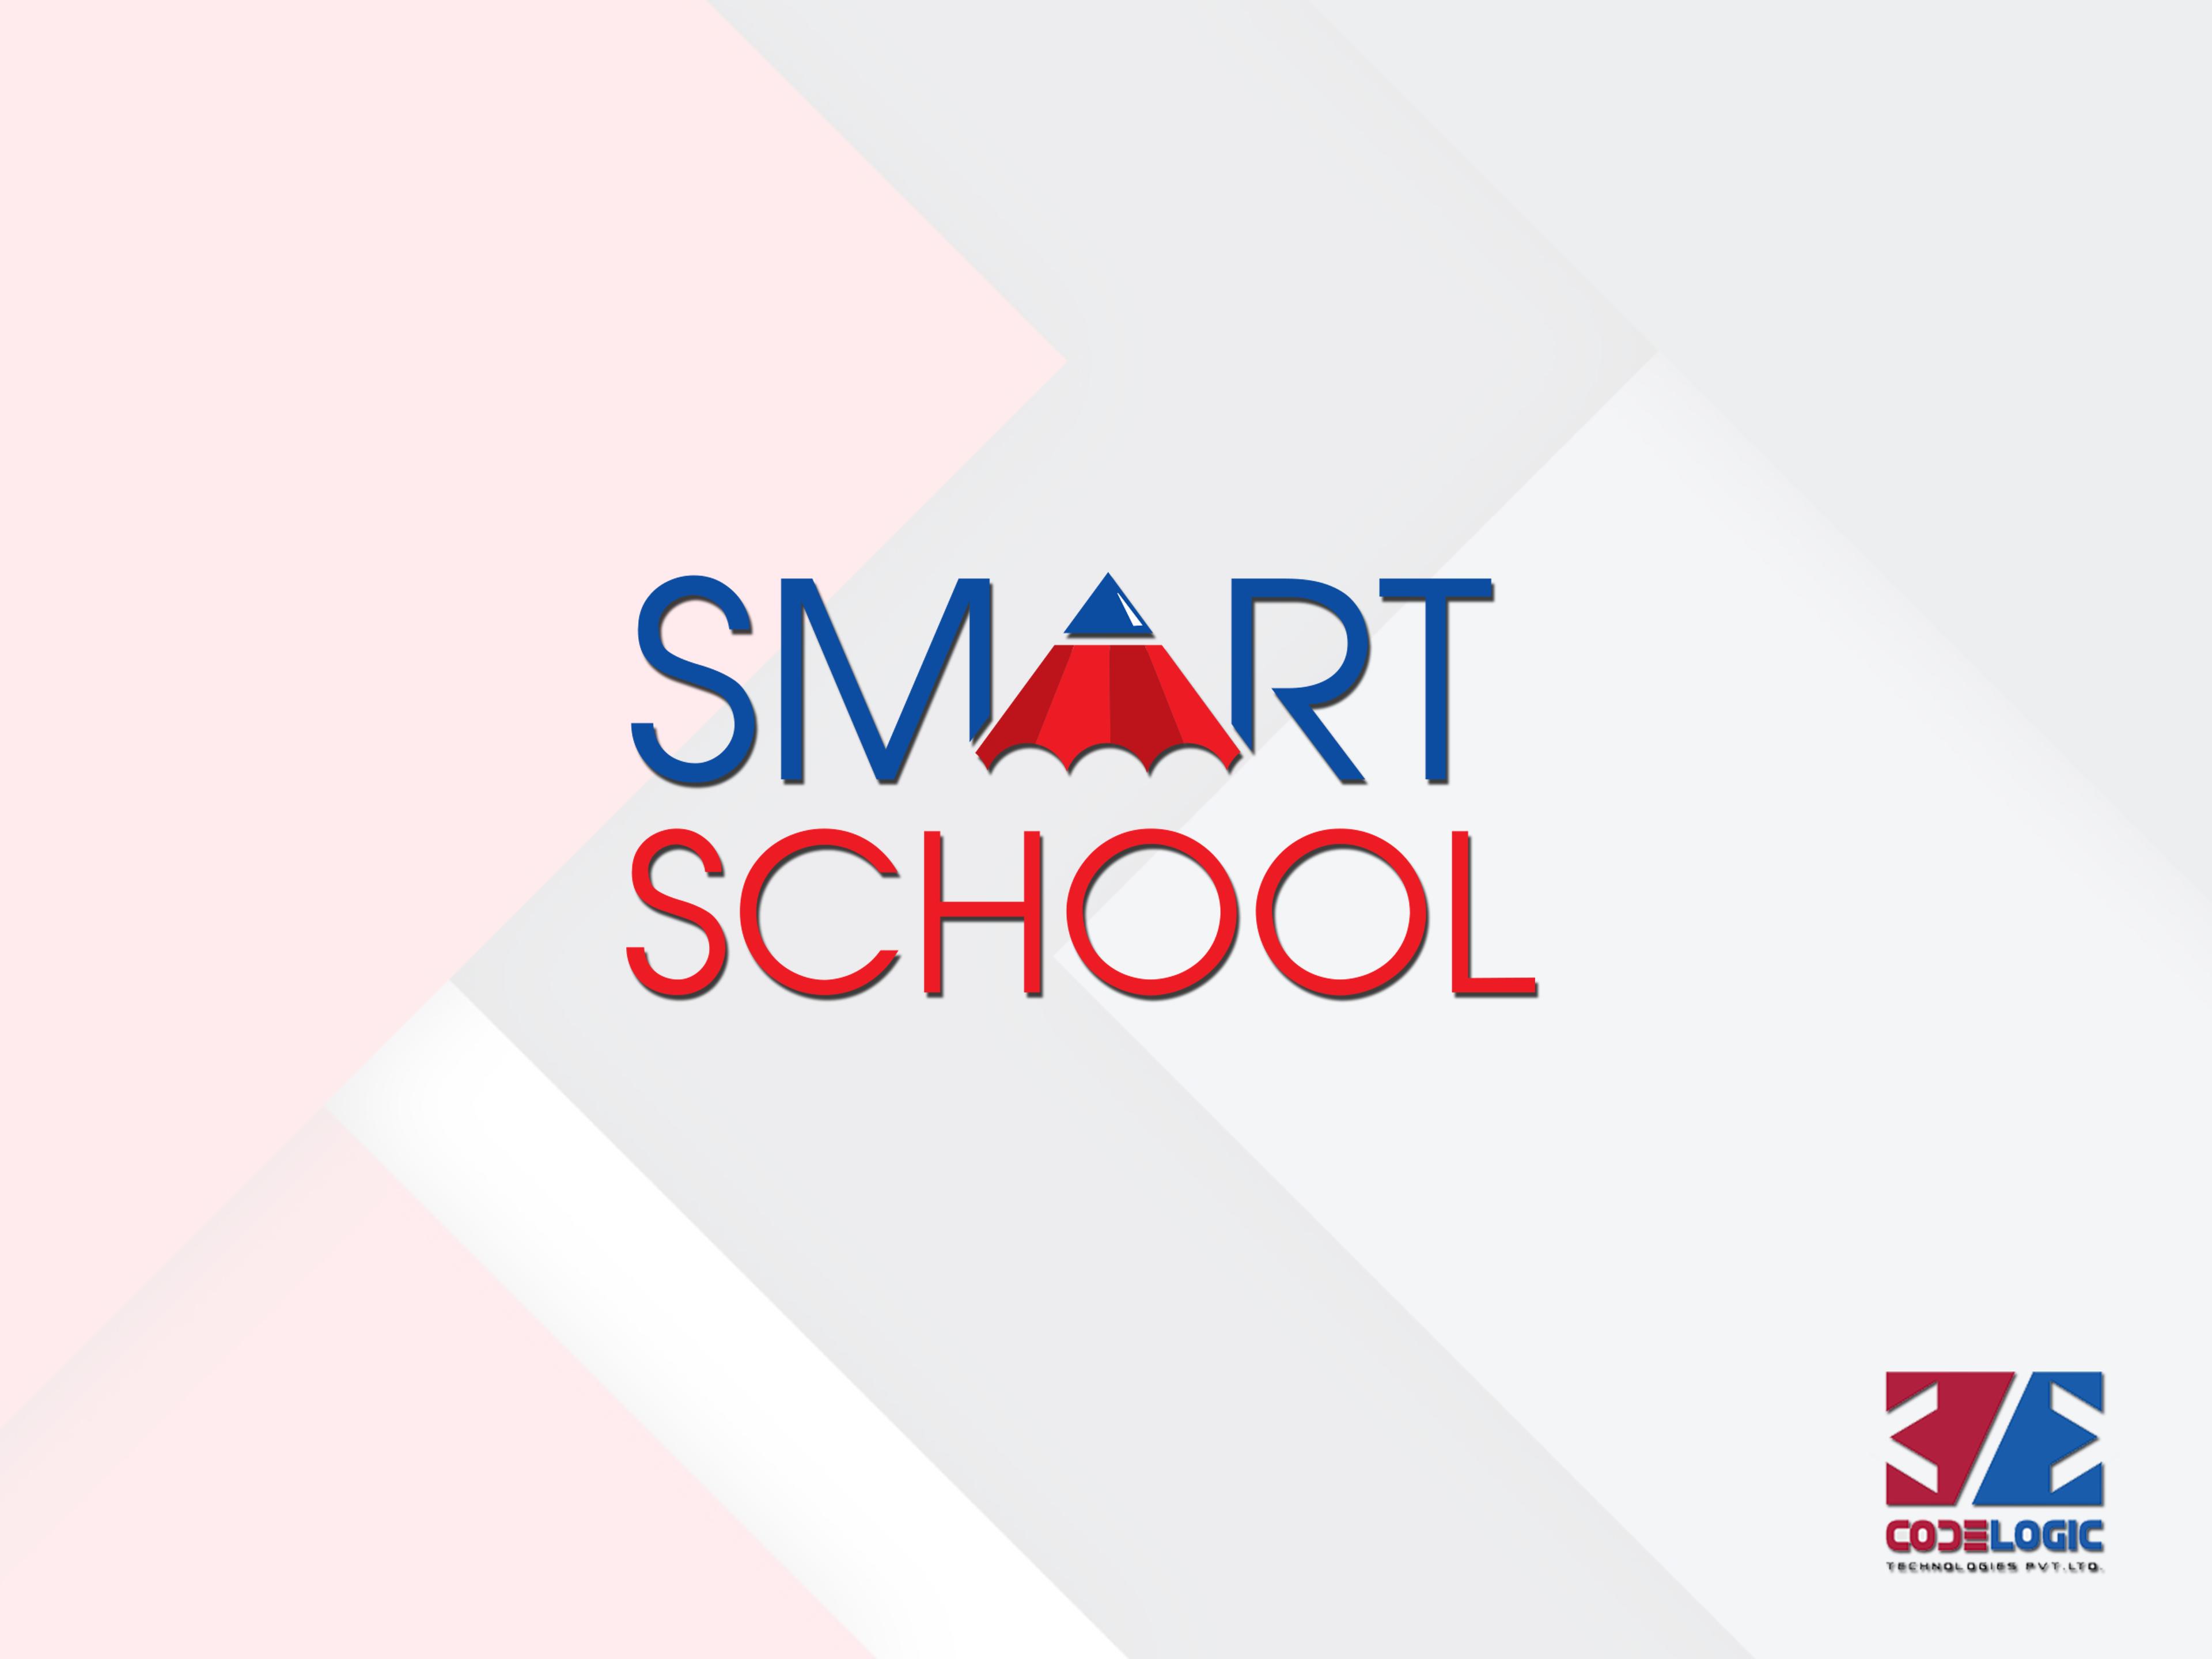 Shree Jana Jagriti Secondary School for Android - APK Download